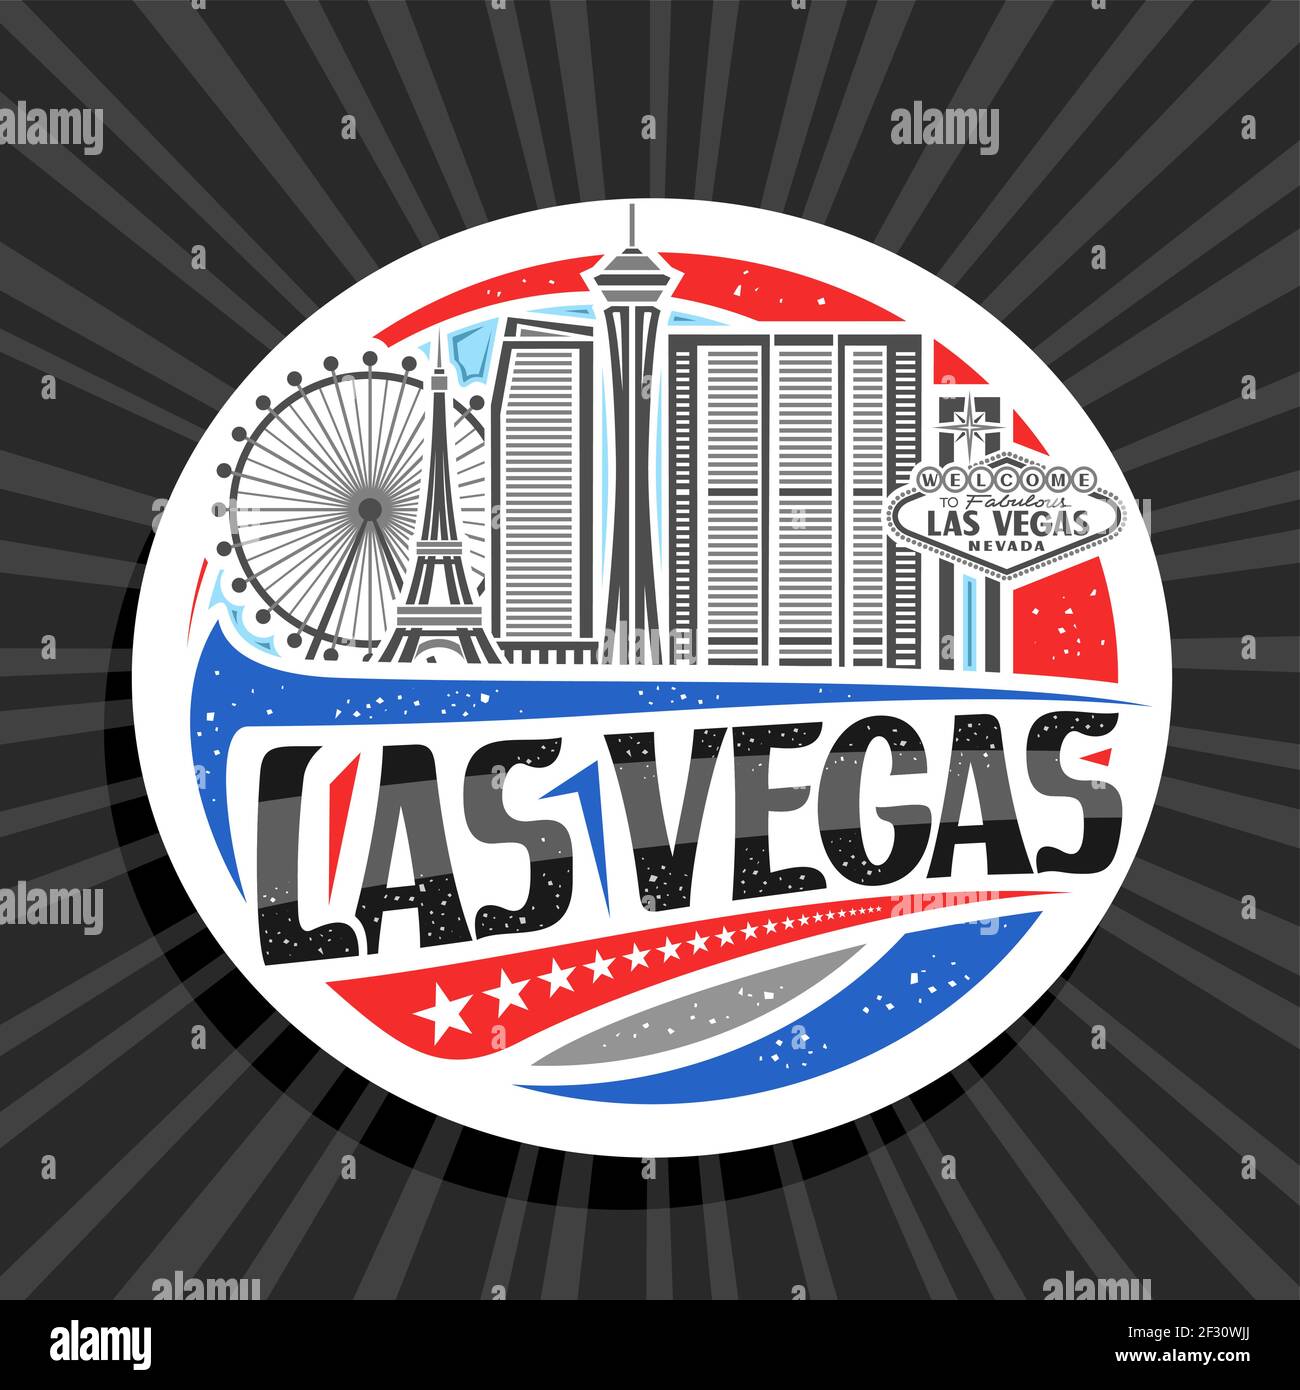 Welcome to Las Vegas Stock Vector Image & Art - Alamy